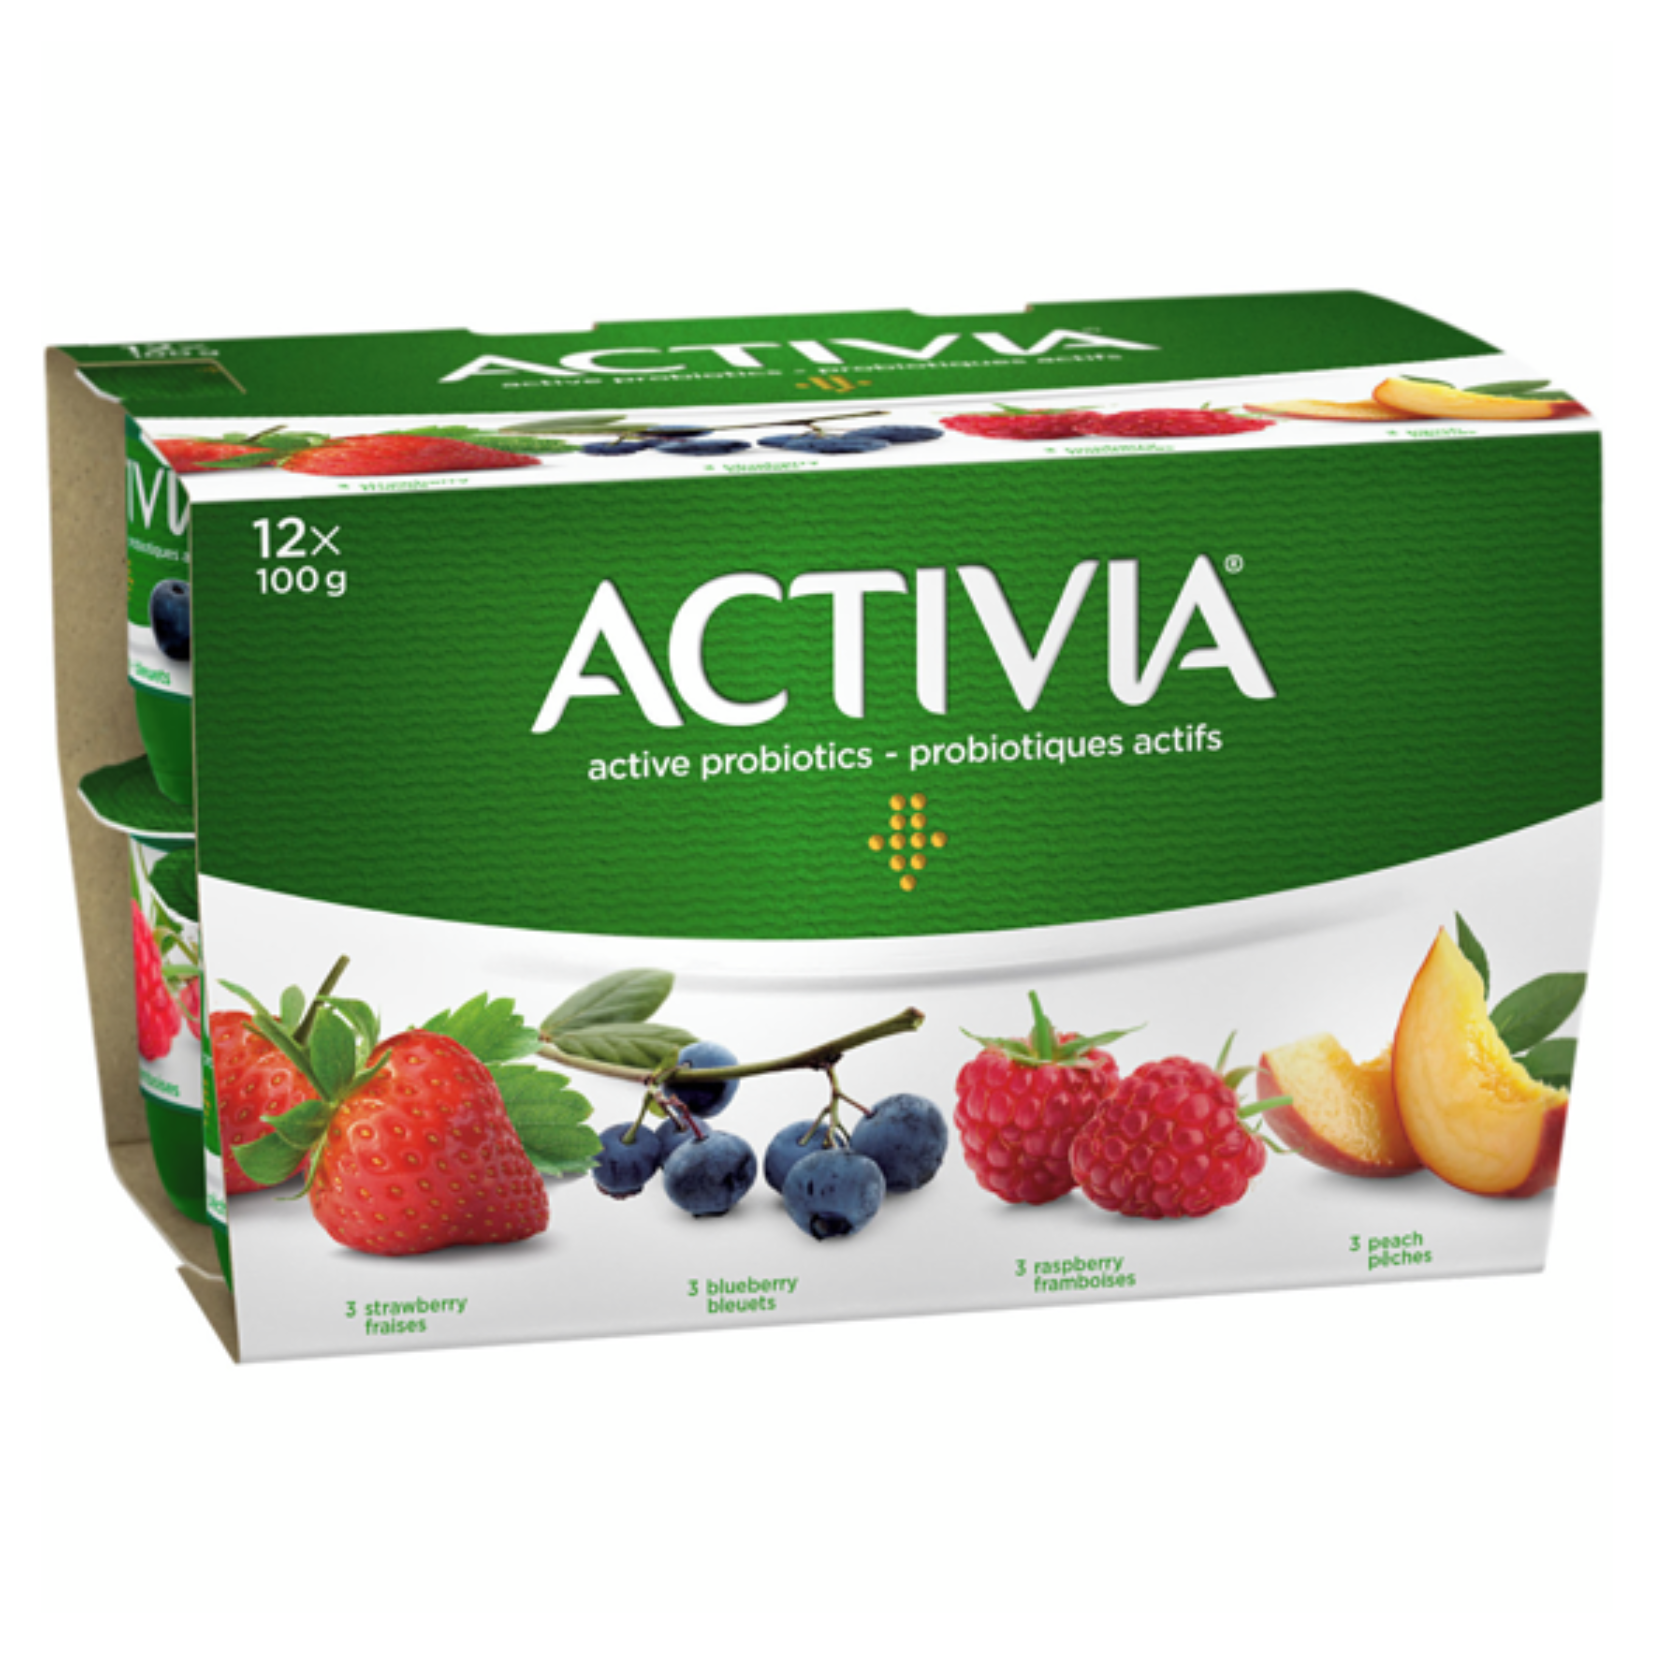 Activia Probiotic Straw, Blue, Rasp, Peach Yogurt 100g x 12